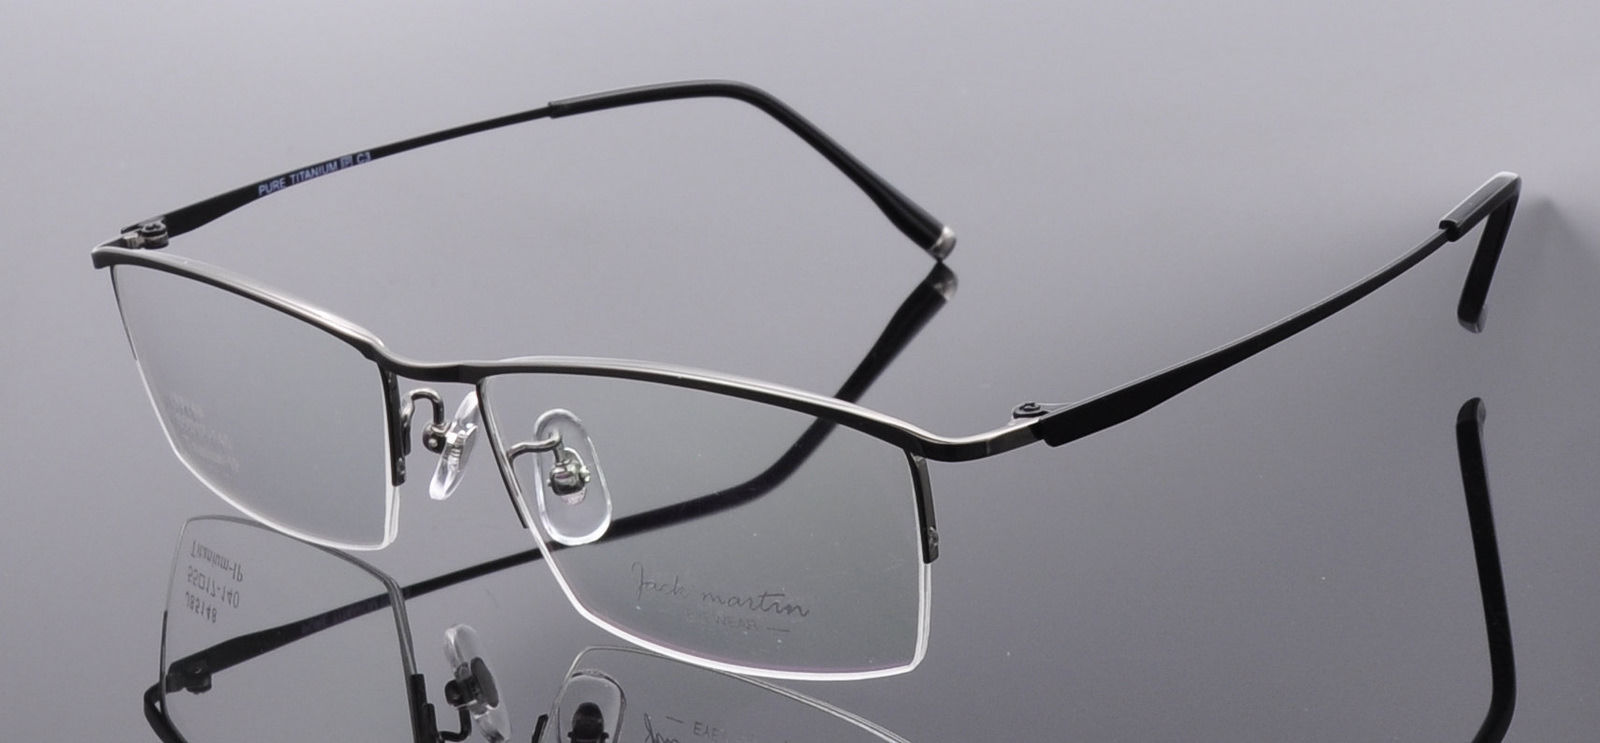 Mens Titanium Half Rimless Rectangular Eyeglass Frames Glasses ...